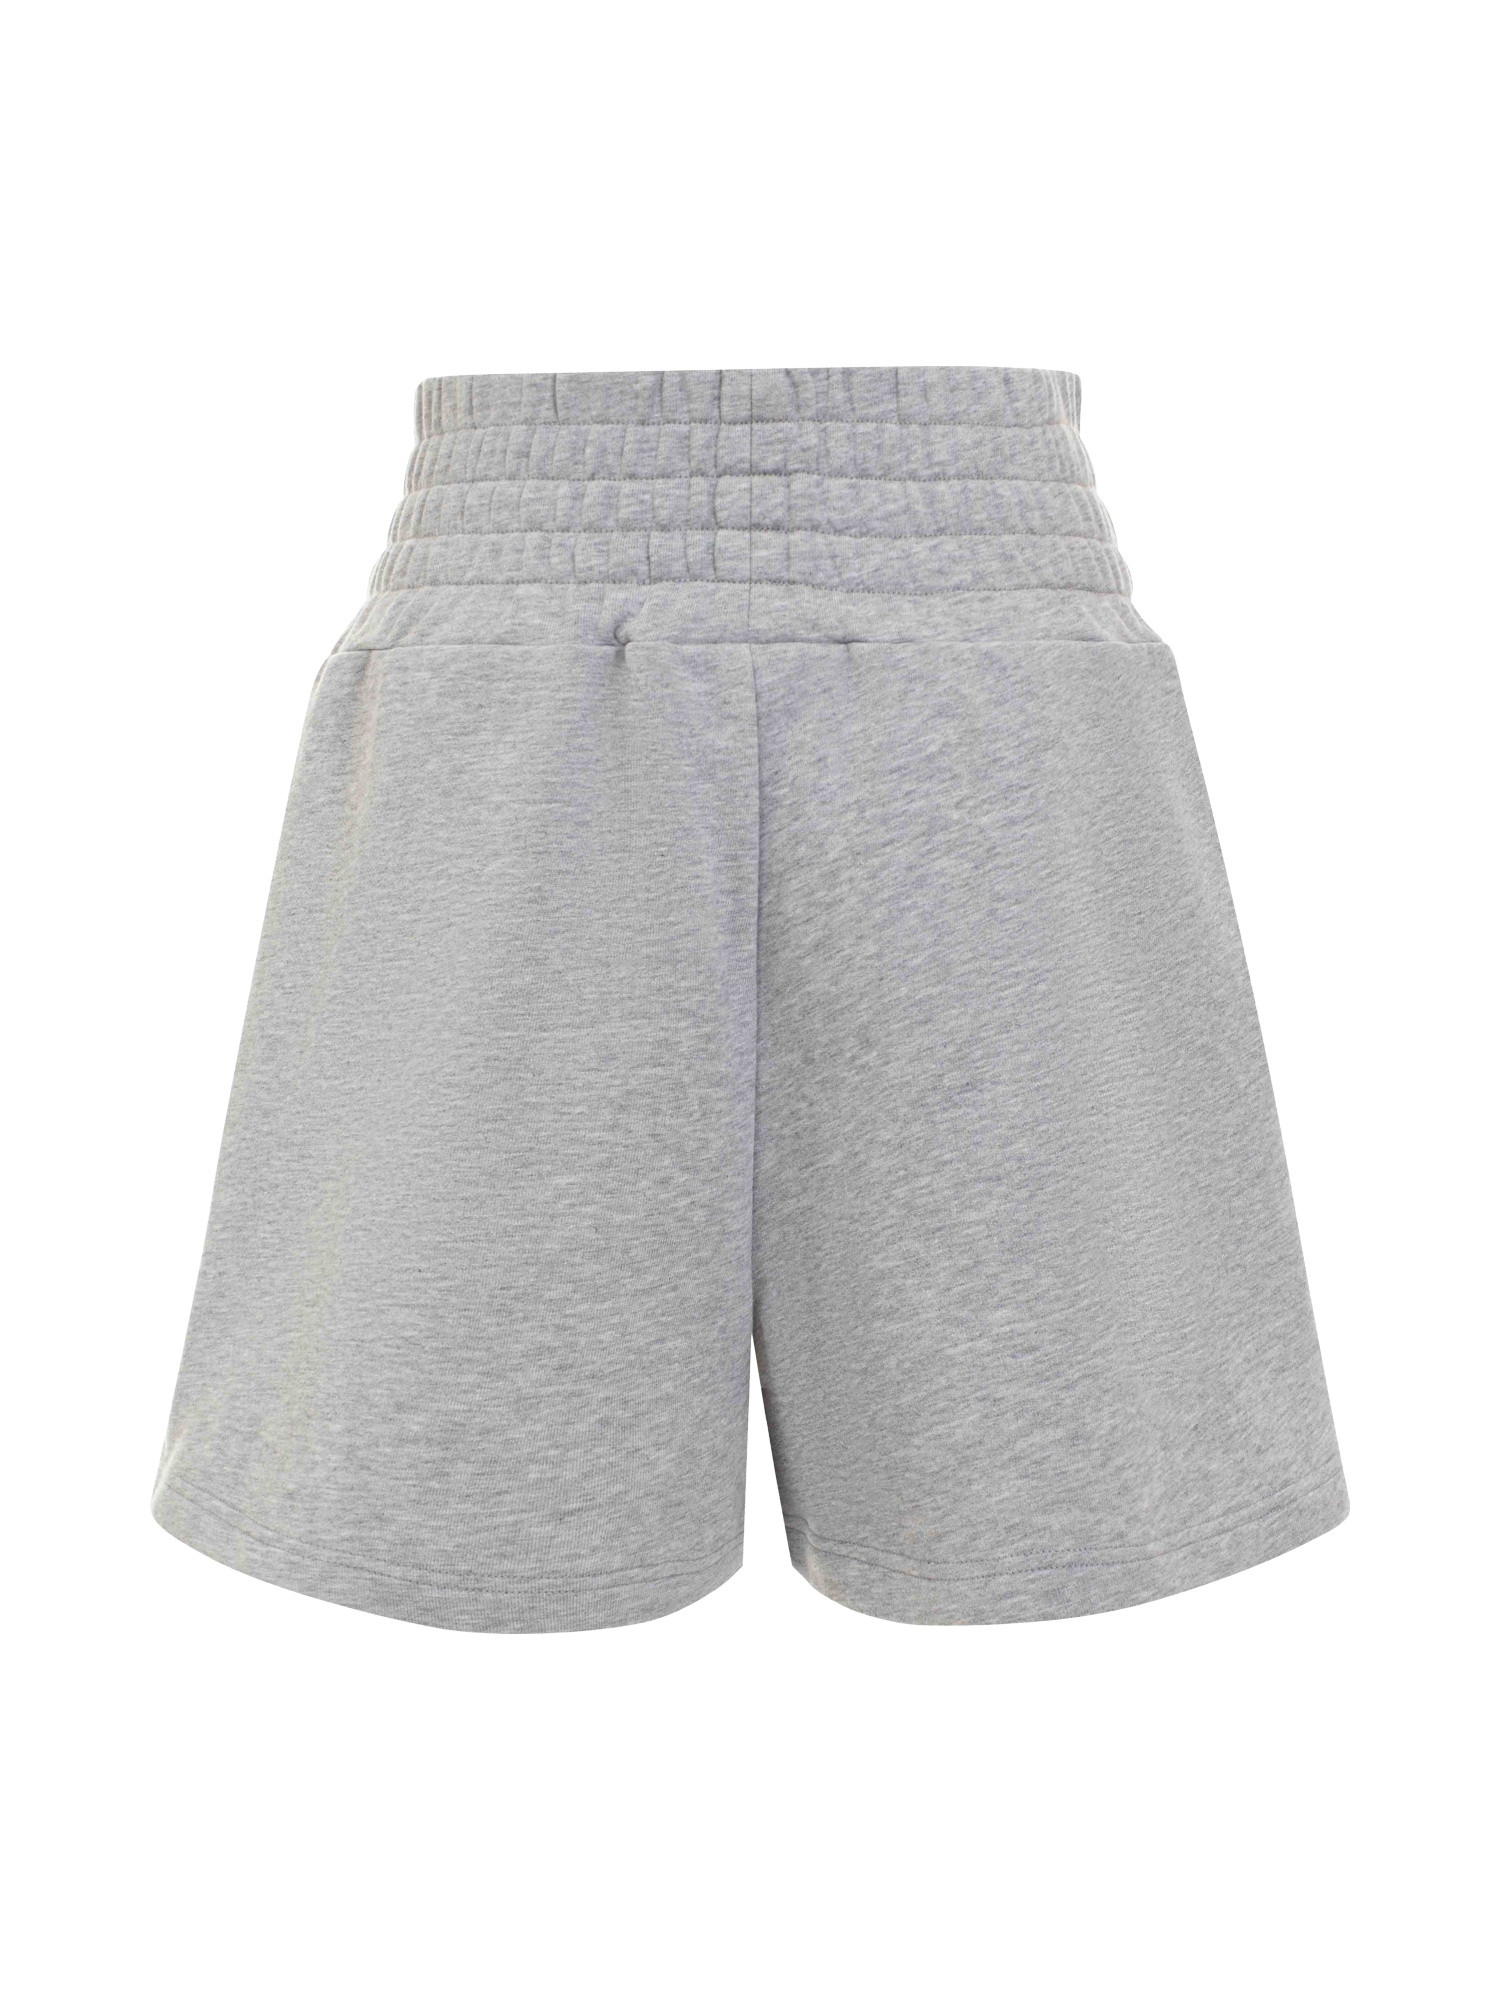 Chiara Ferragni - Regular fit shorts, Grey, large image number 1